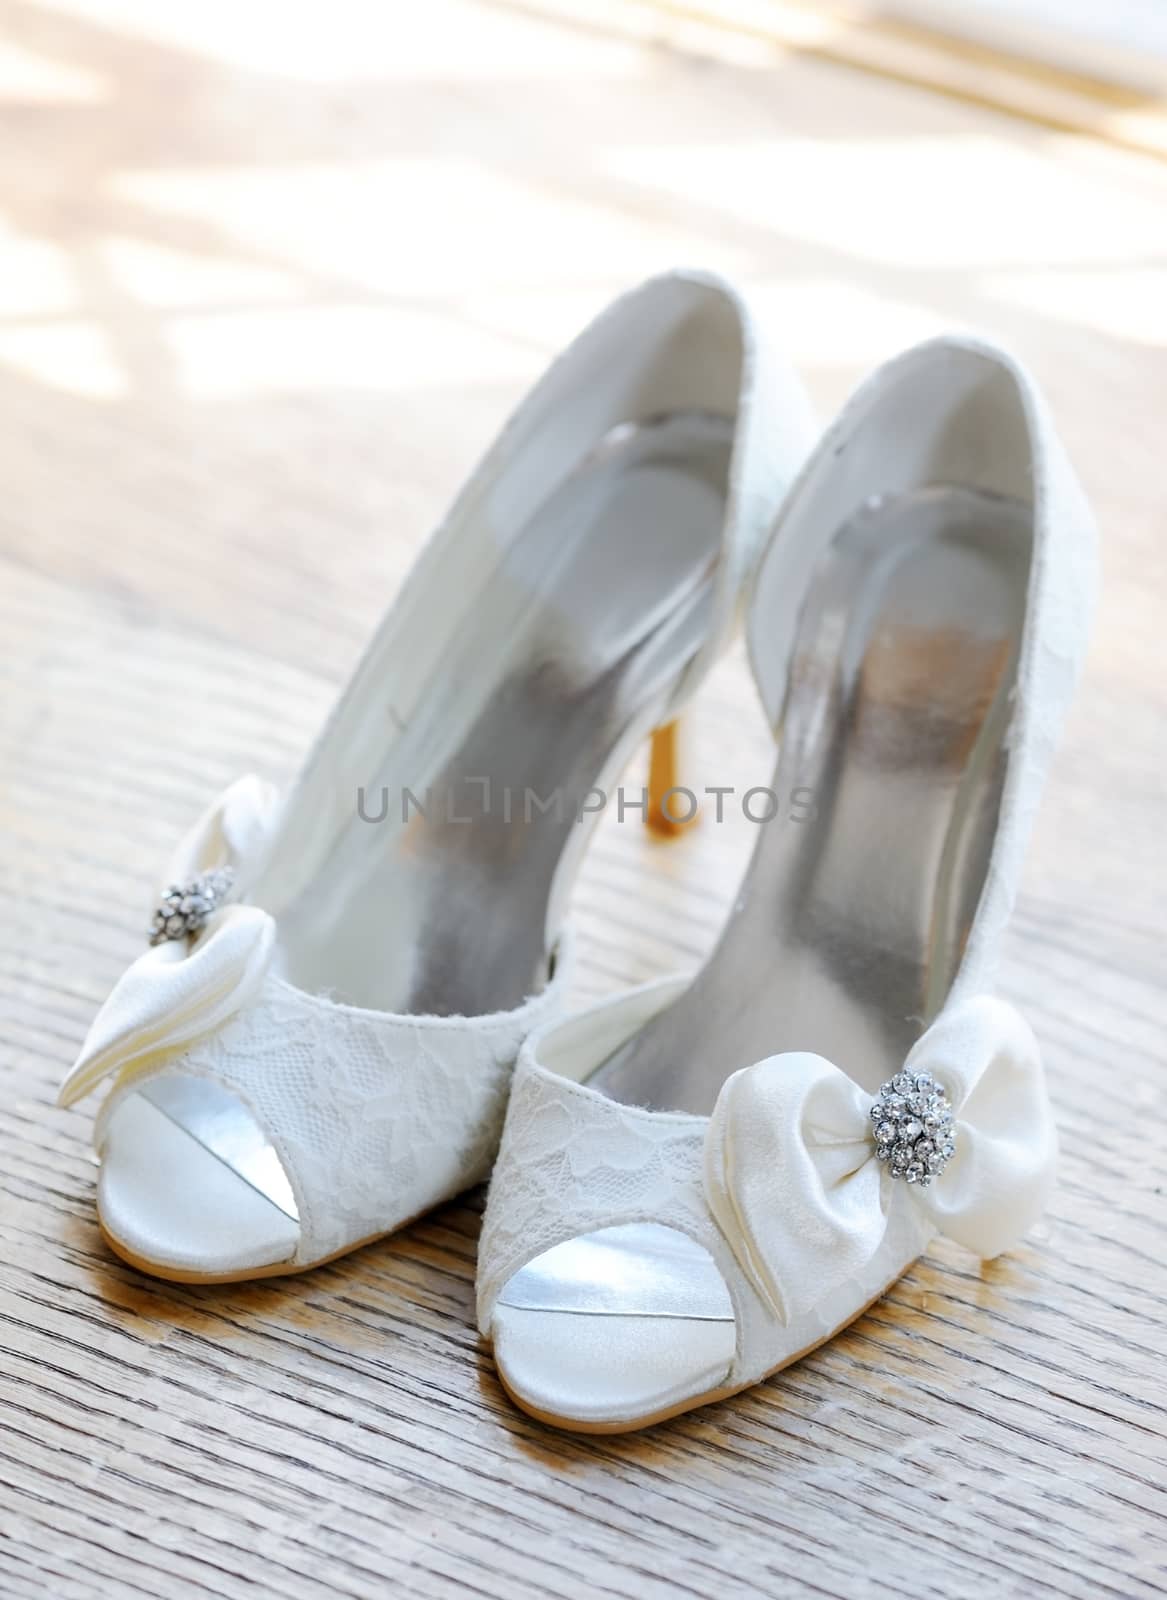 Brides white shoes on wedding day